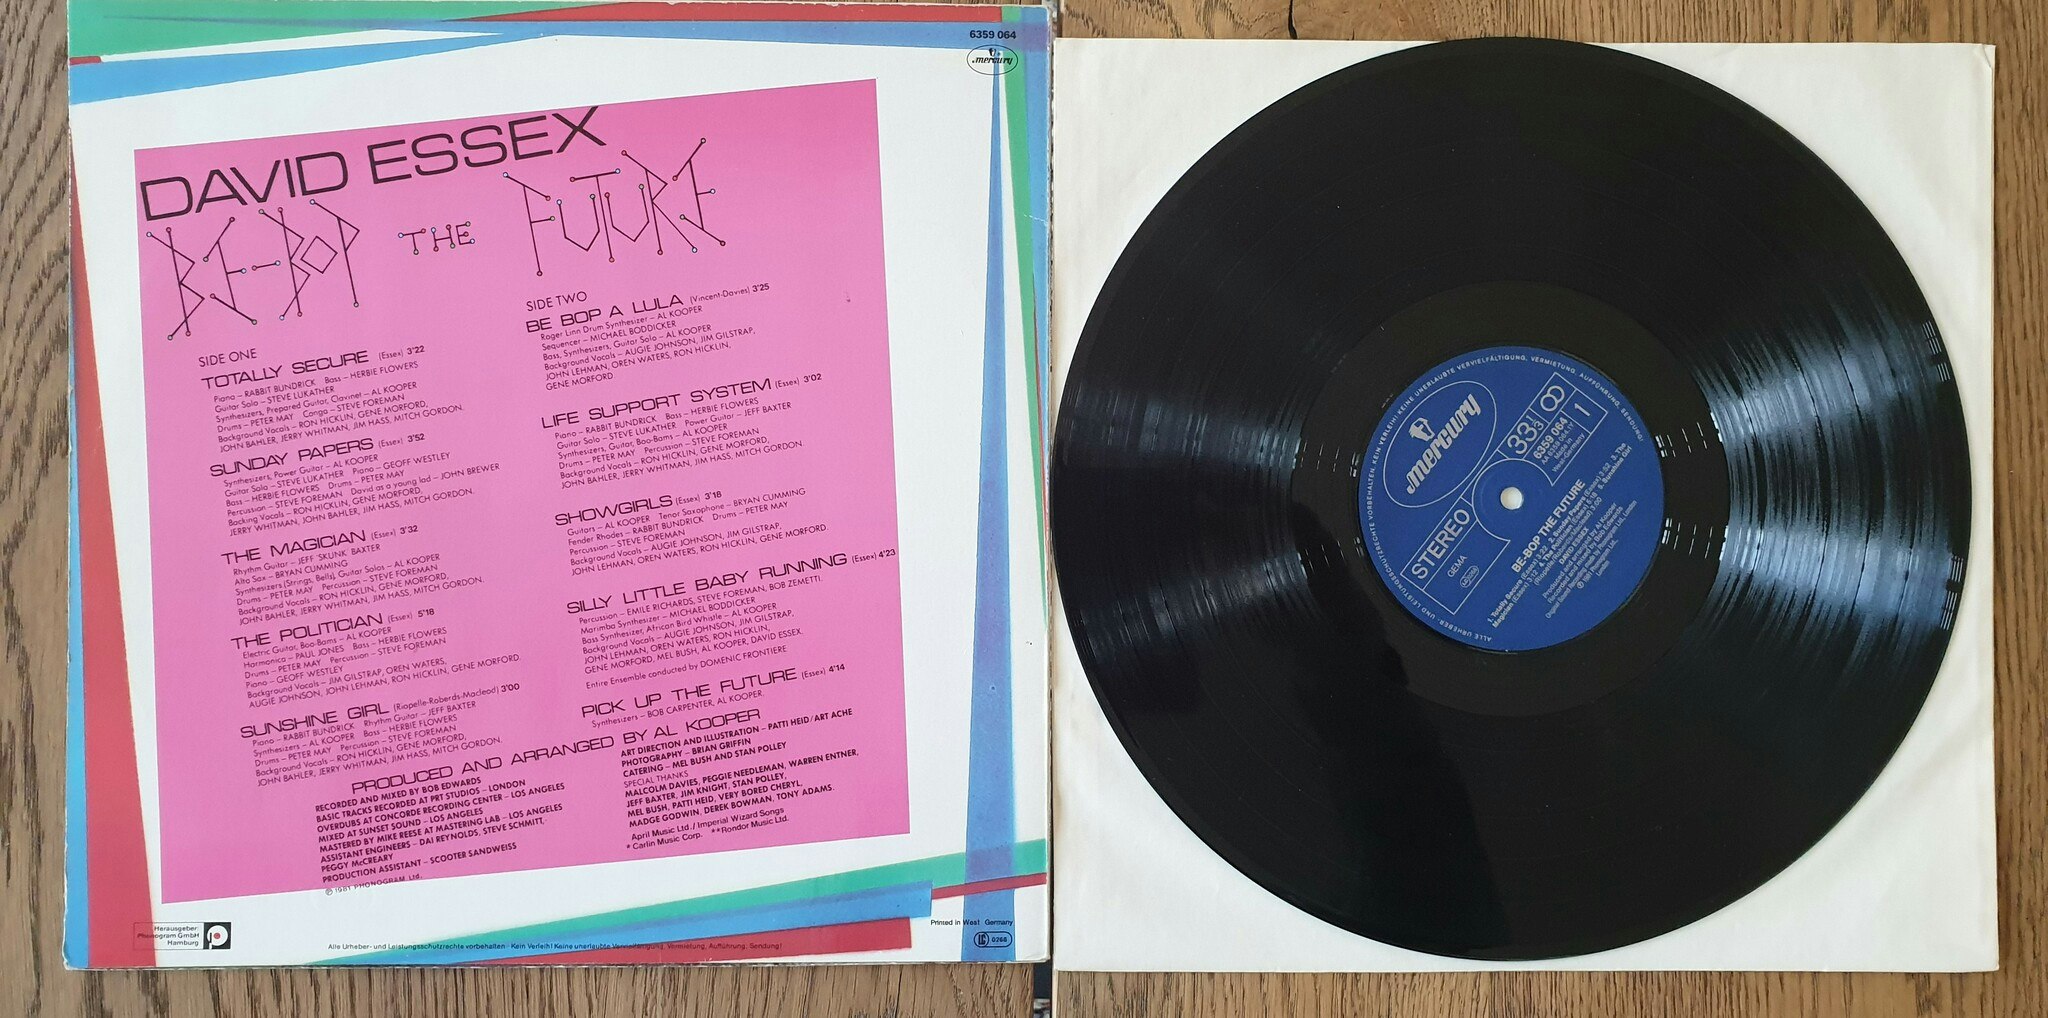 David Essex, Be-Bop the future. Vinyl LP